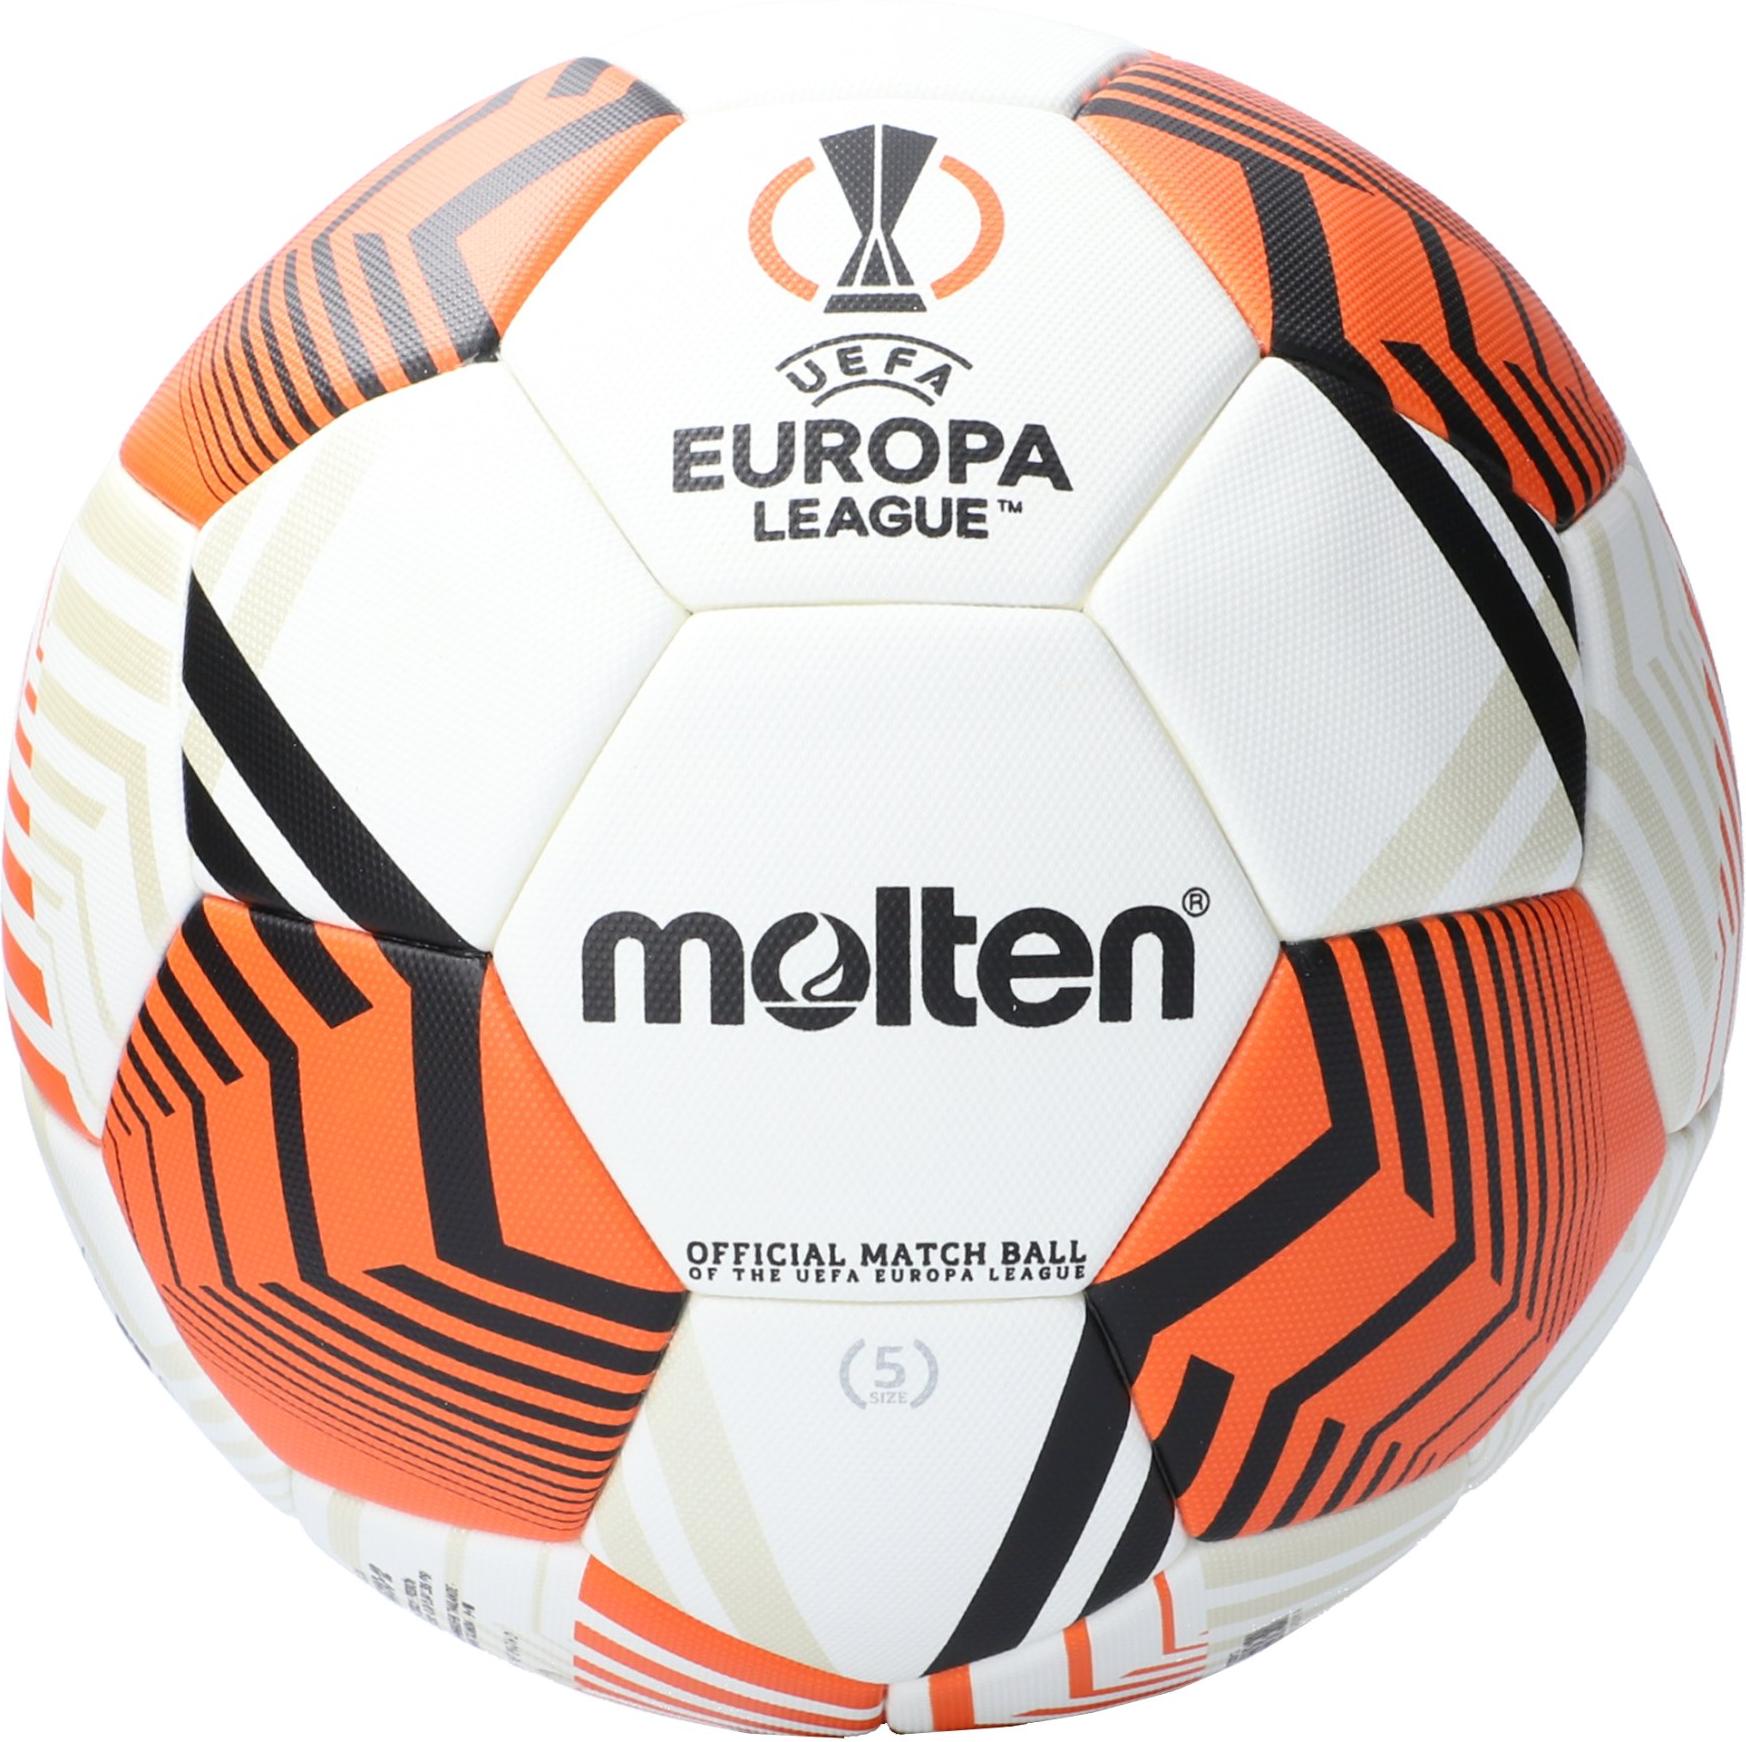 Minge Molten Molten Europa League OMB 2021/22